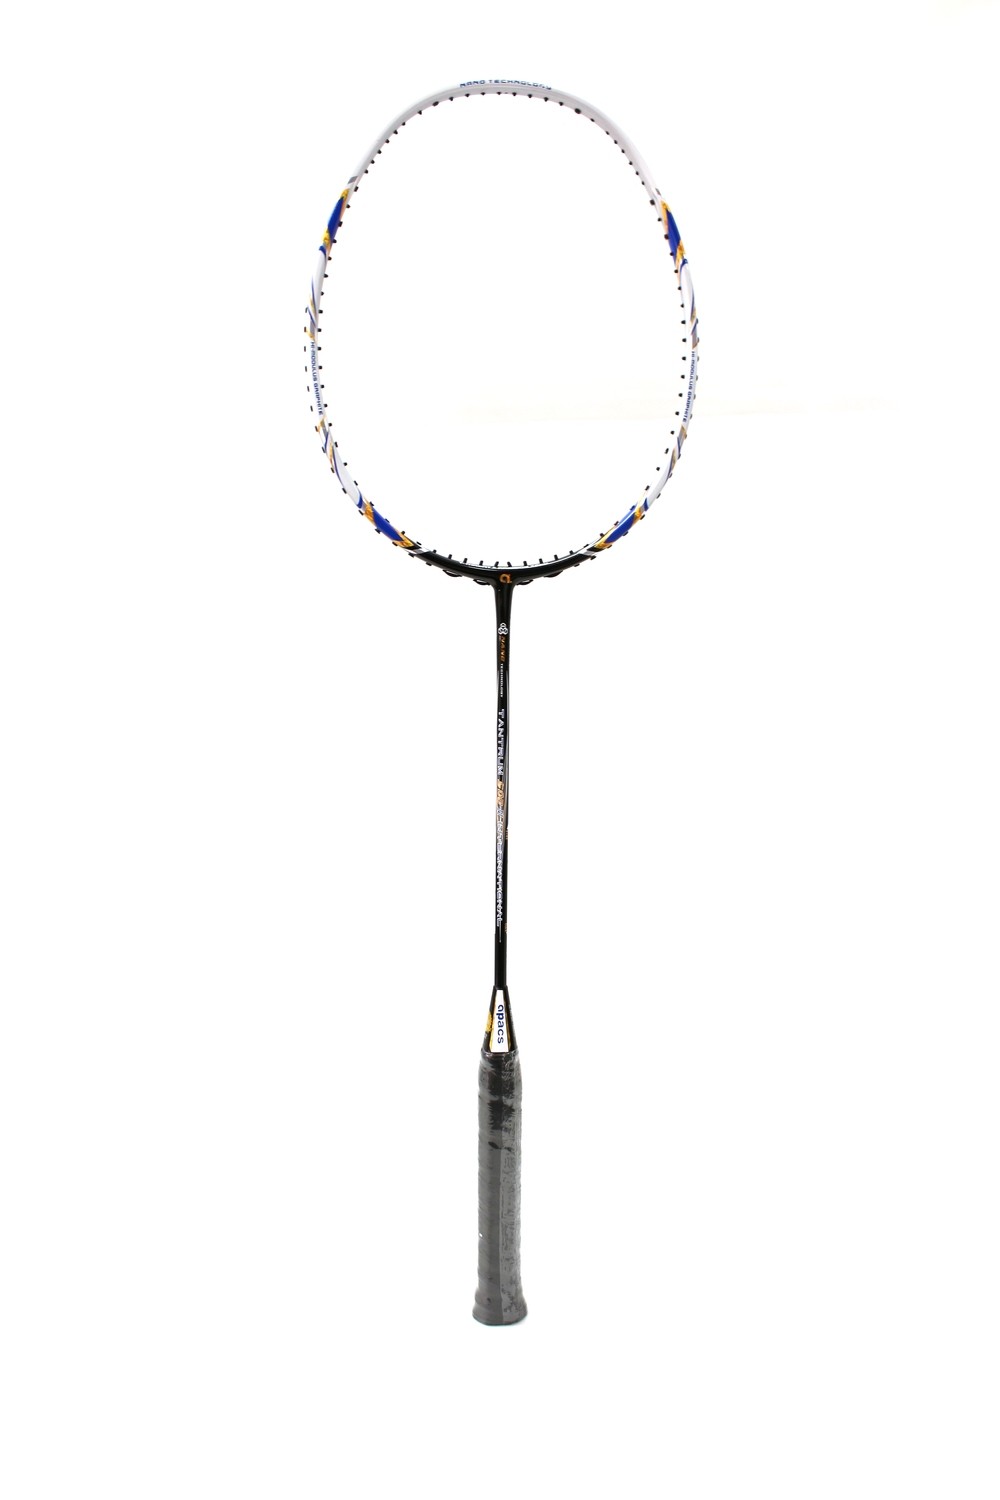 Apacs Tantrum 500 II International Badminton Racquet